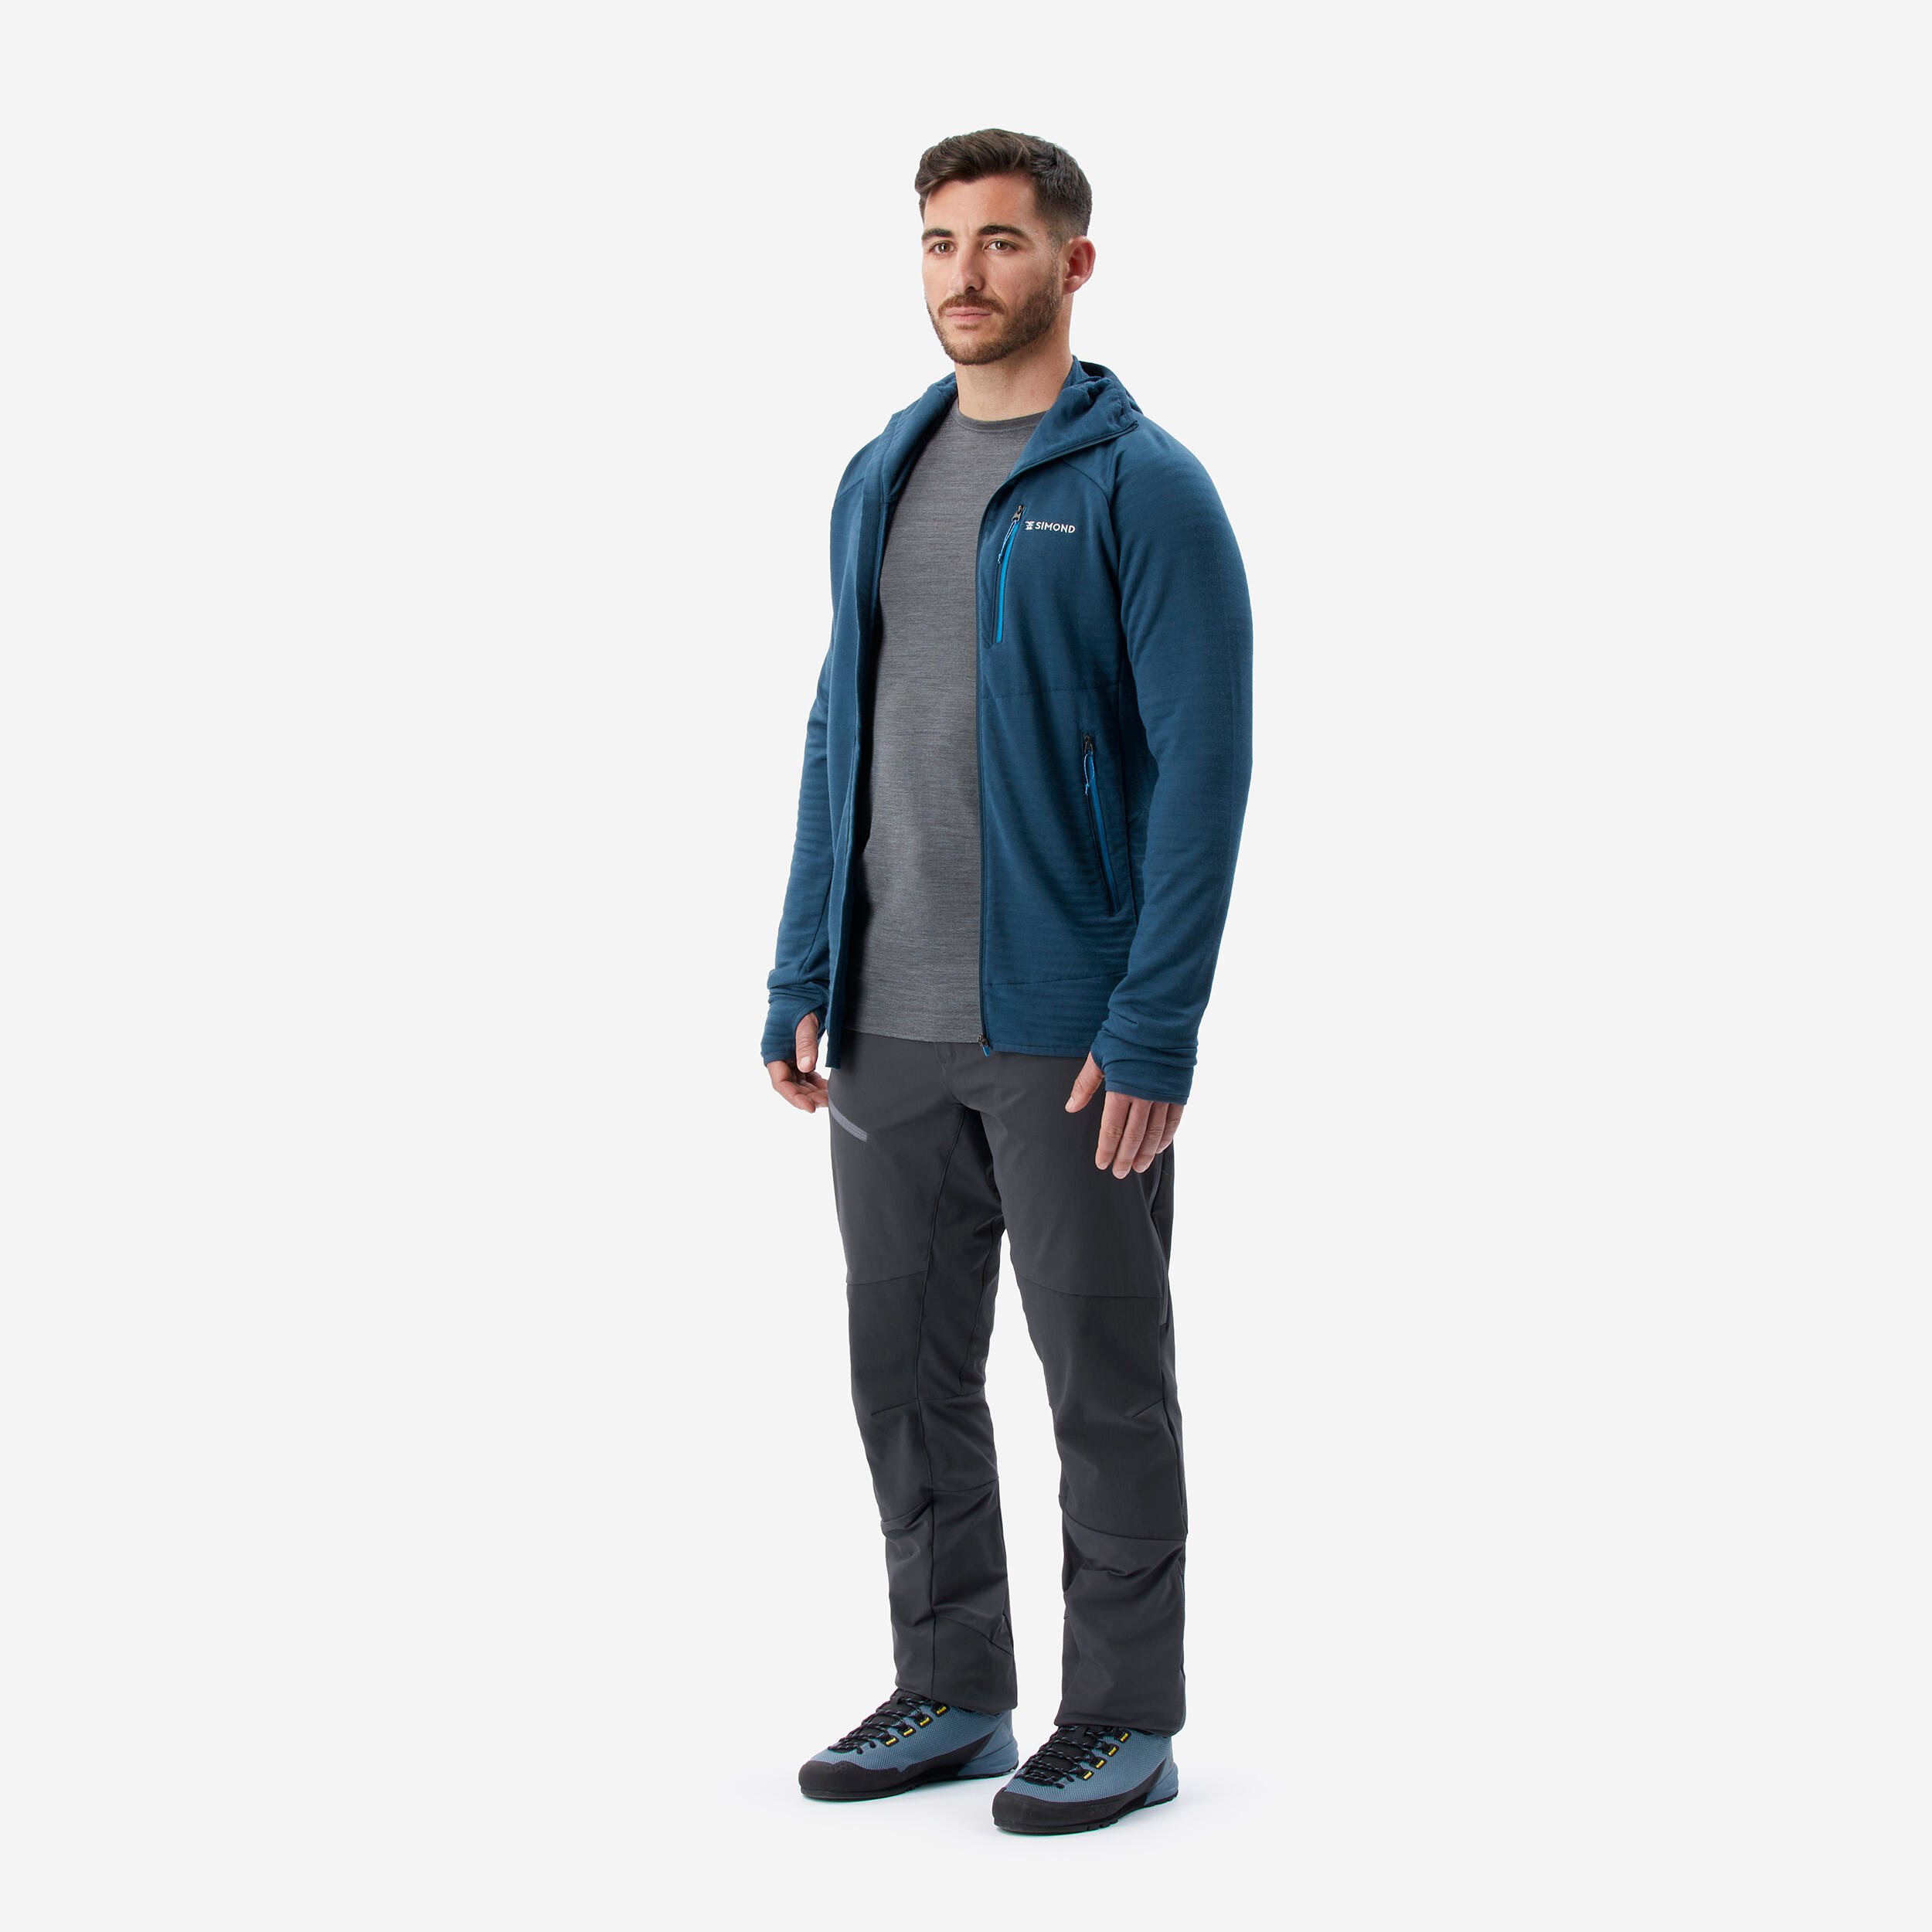 Men’s hooded pullover merino wool - MOUNTAINEERING - Blue 2/5